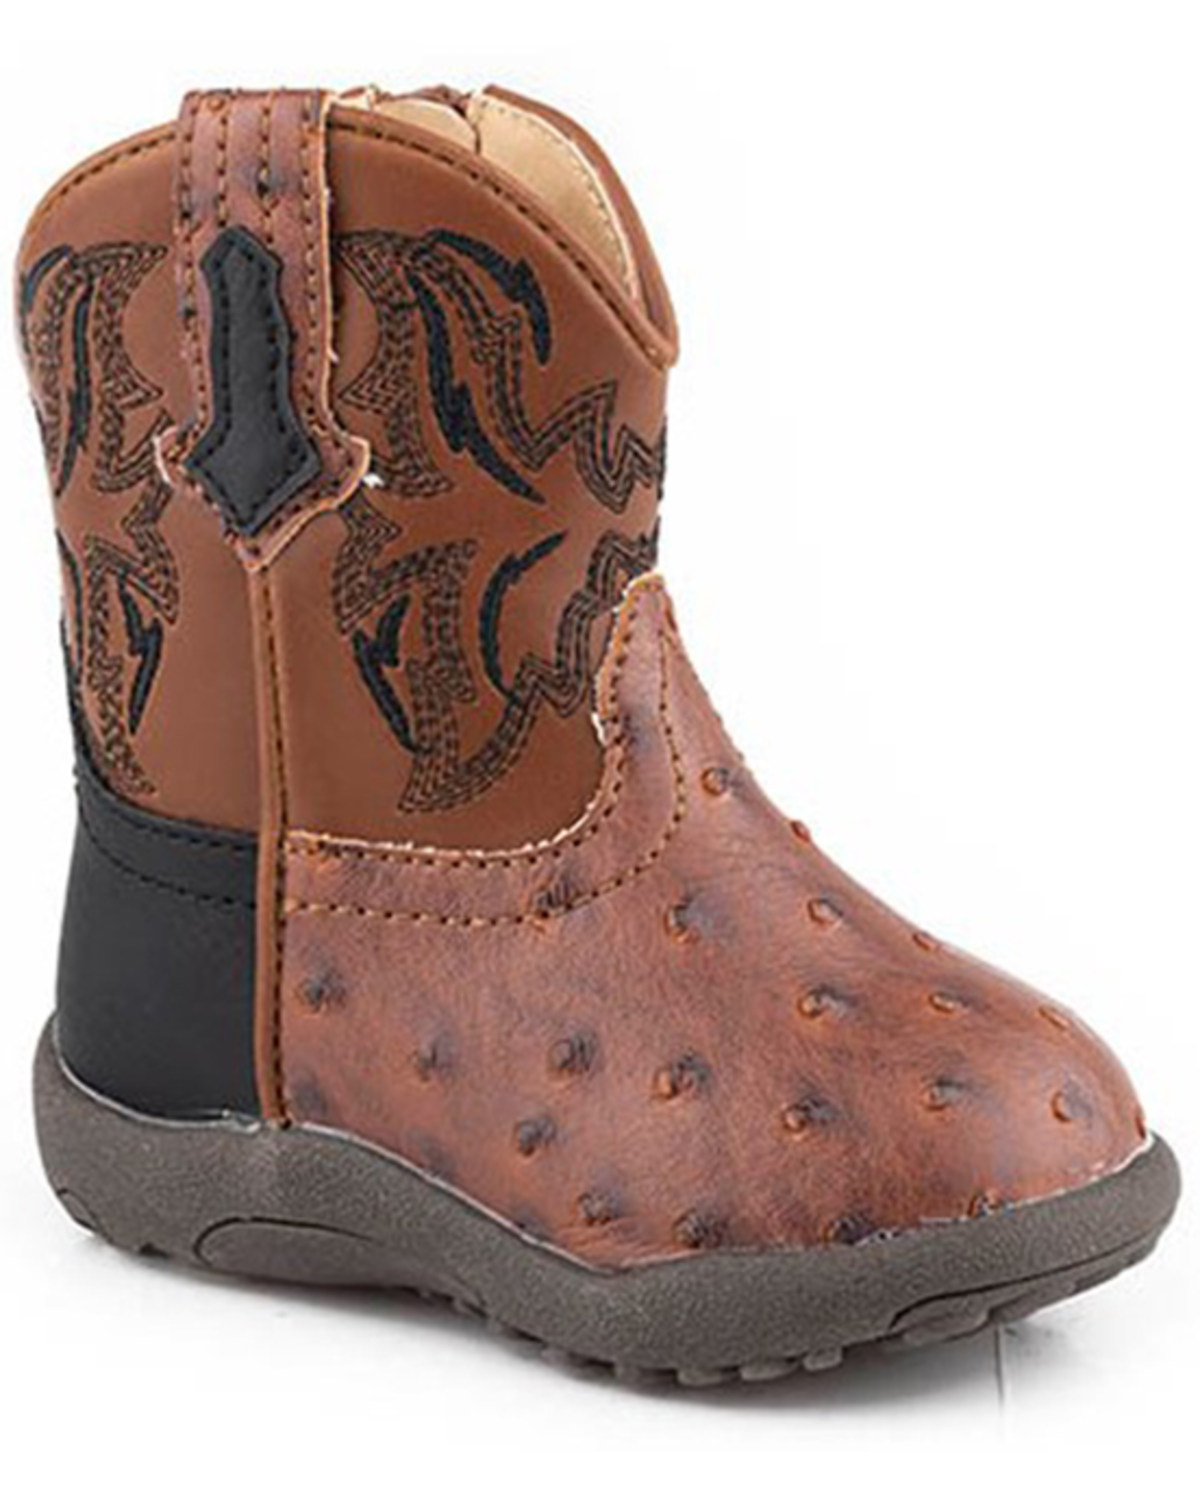 Roper Infant Boys' Dalton Cowbabies Western Boots - Round Toe